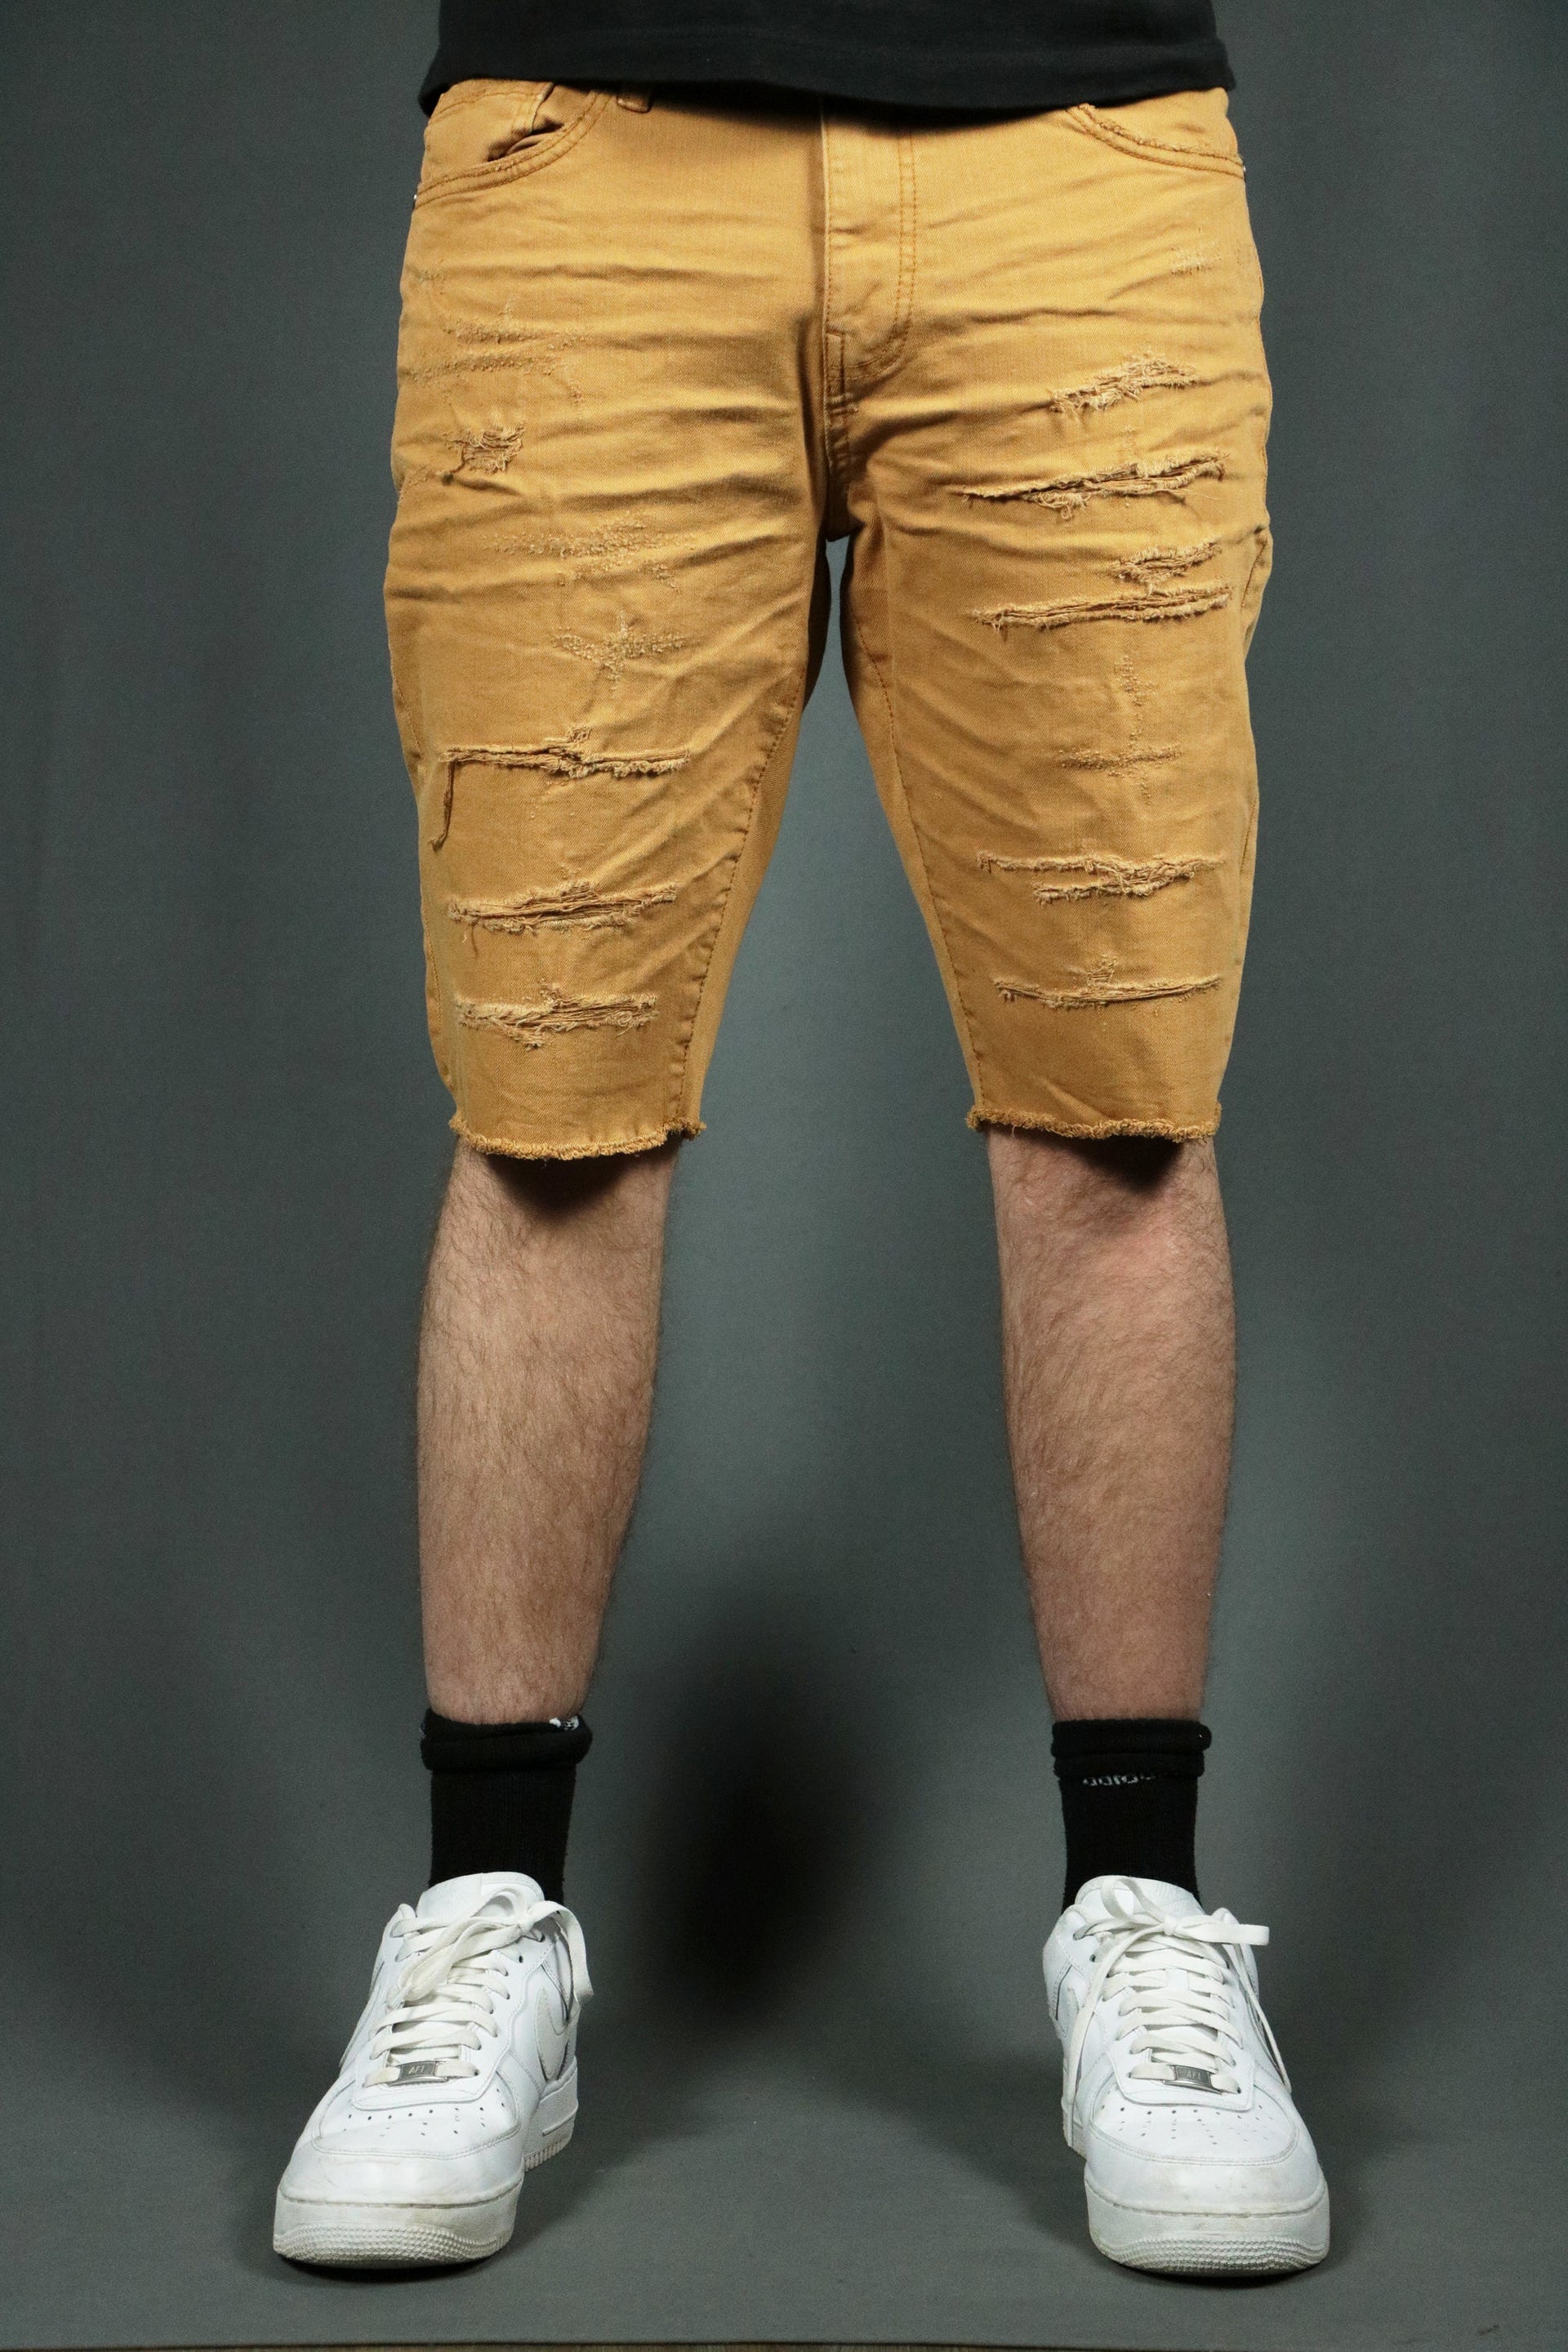 Model wearing the khaki ripped men shorts.